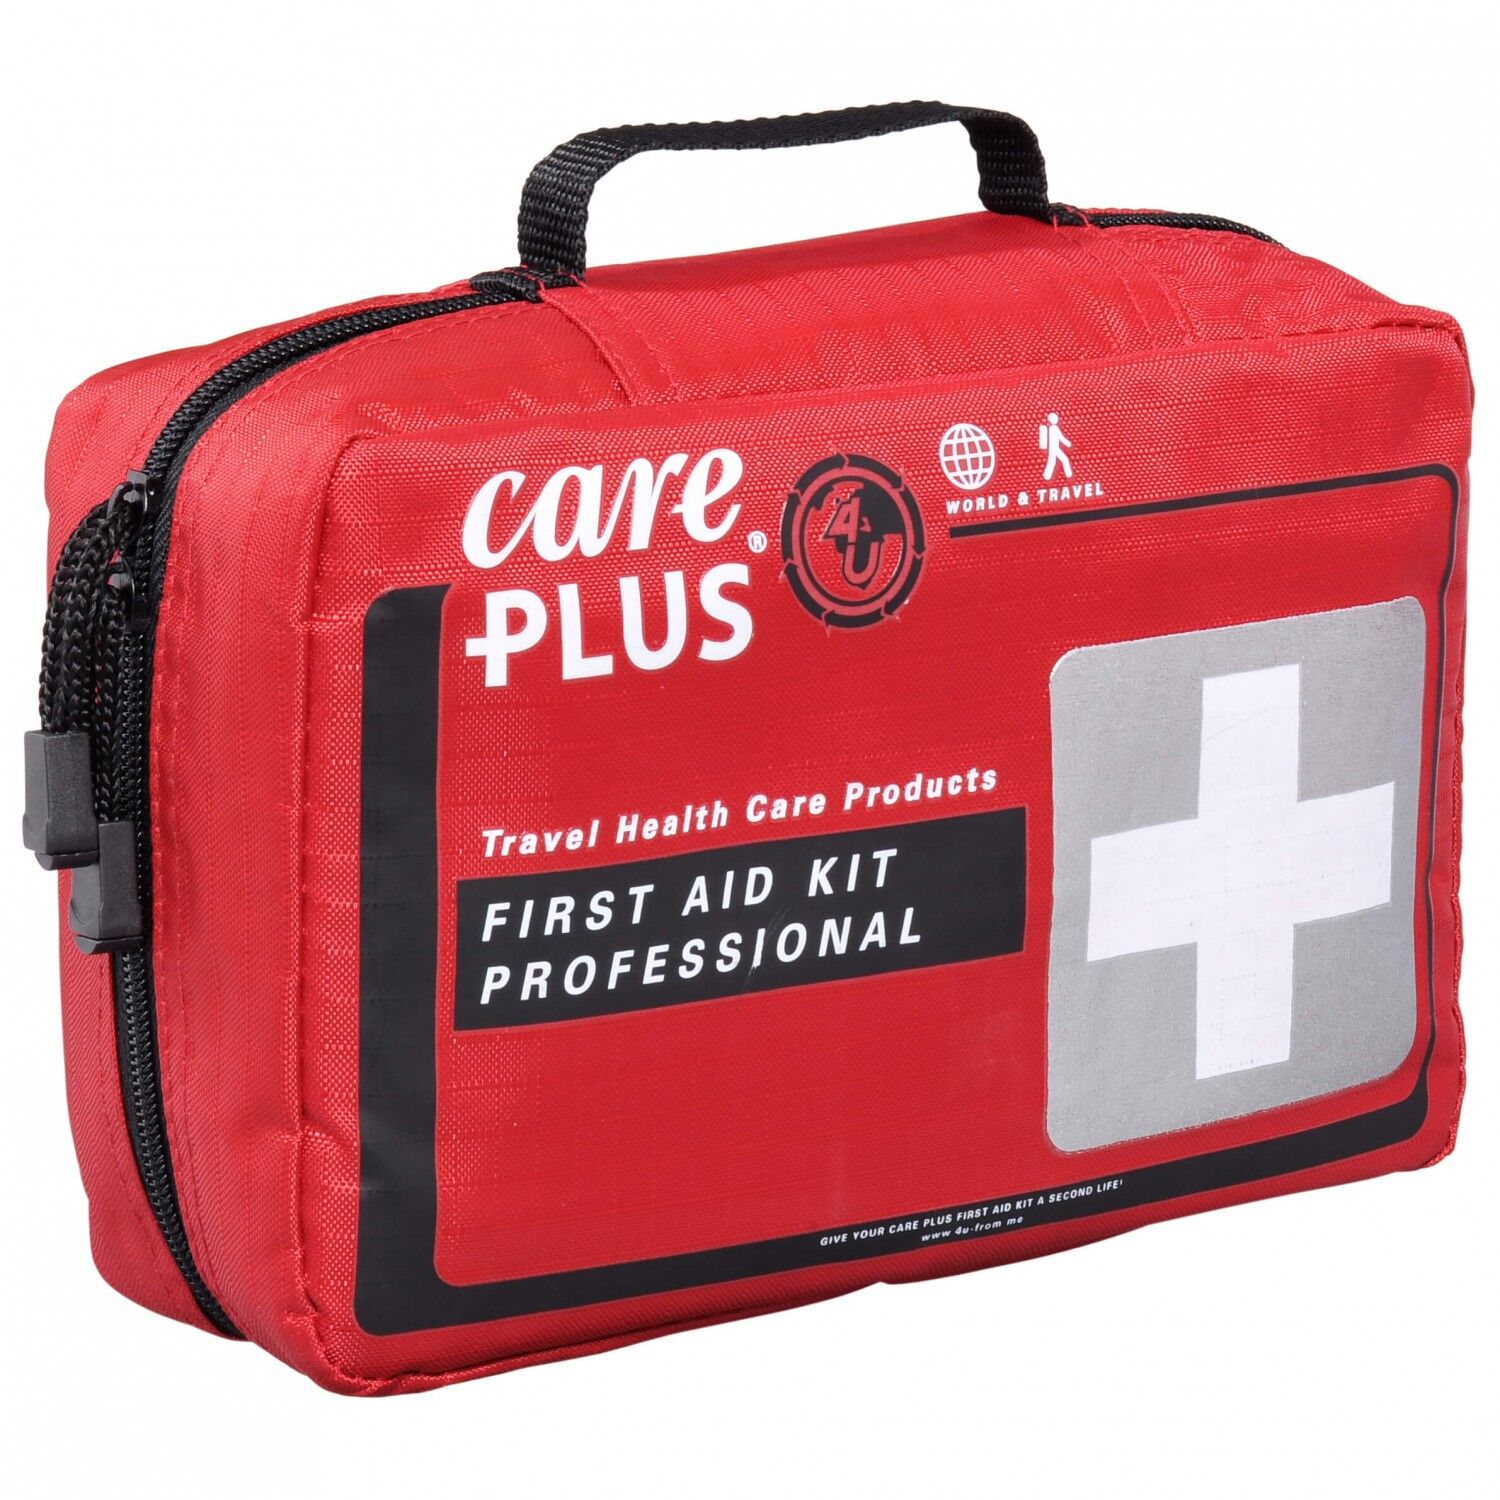 Care Plus First Aid Kit - Professional - BotiquÌn